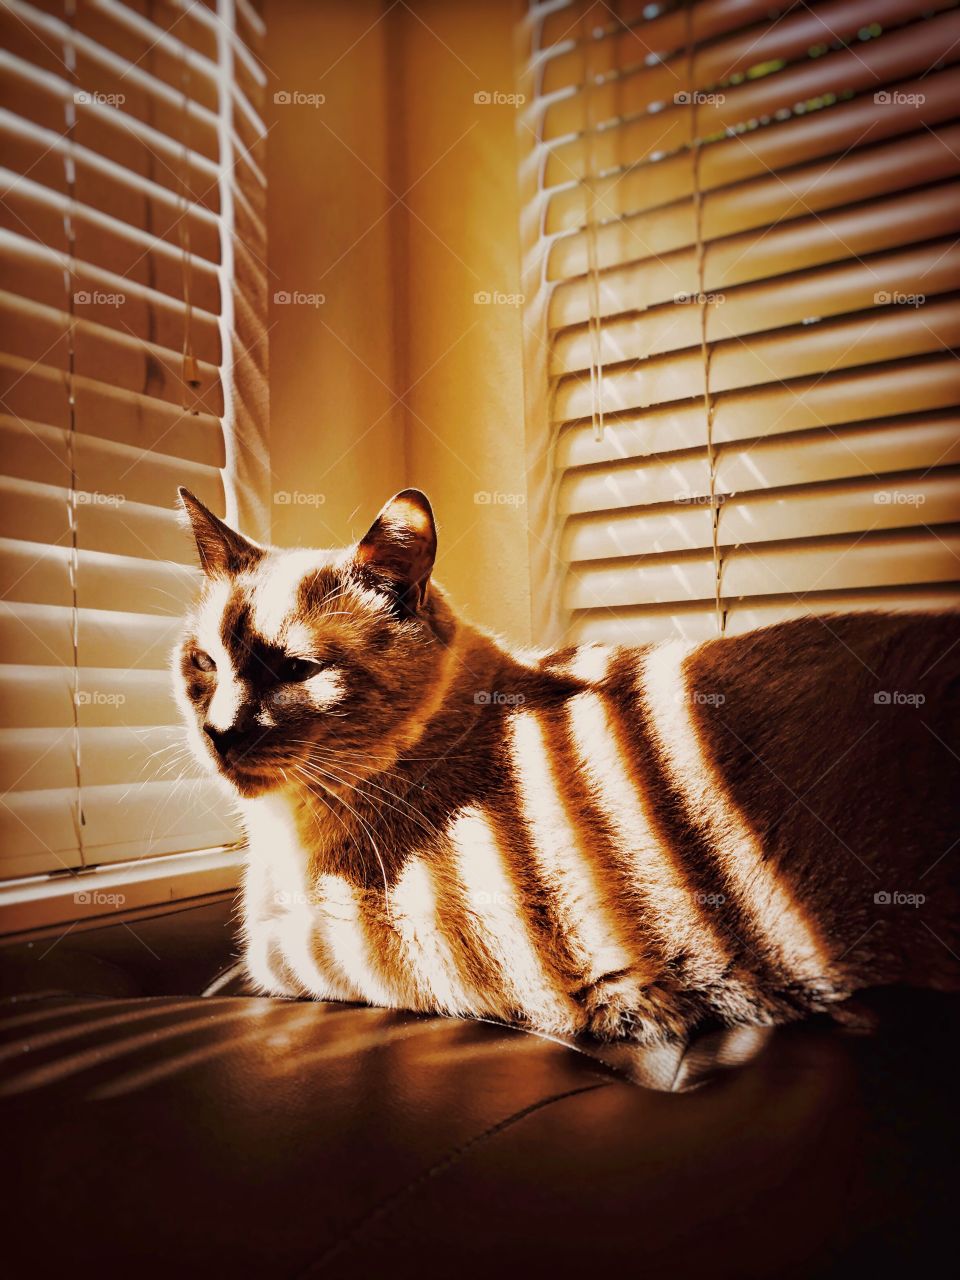 Cat warming itself in sunlight